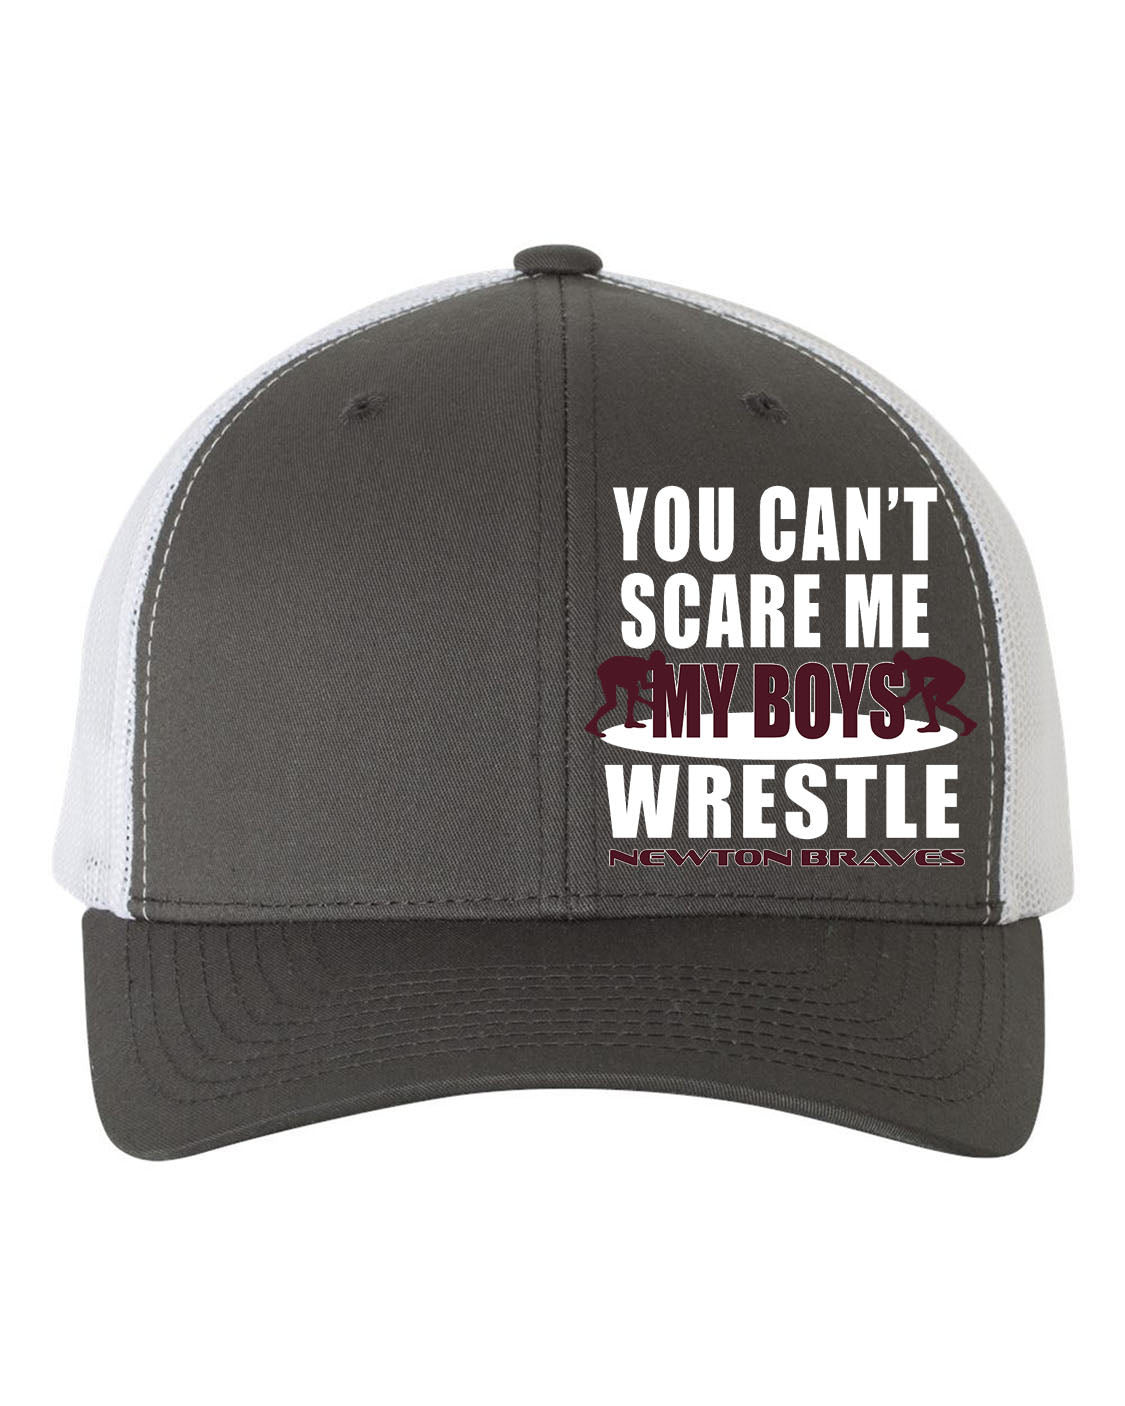 Newton Wrestling Design 11 Trucker Hat